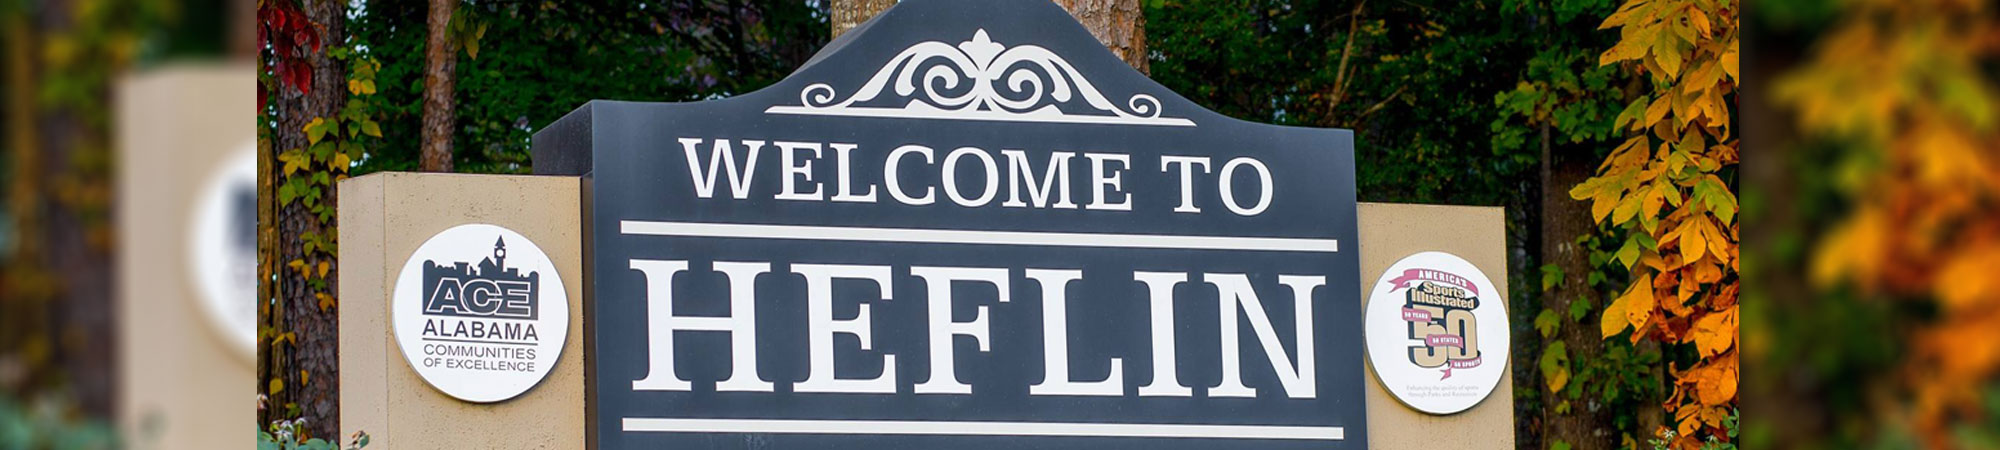 welcome to Heflin sign